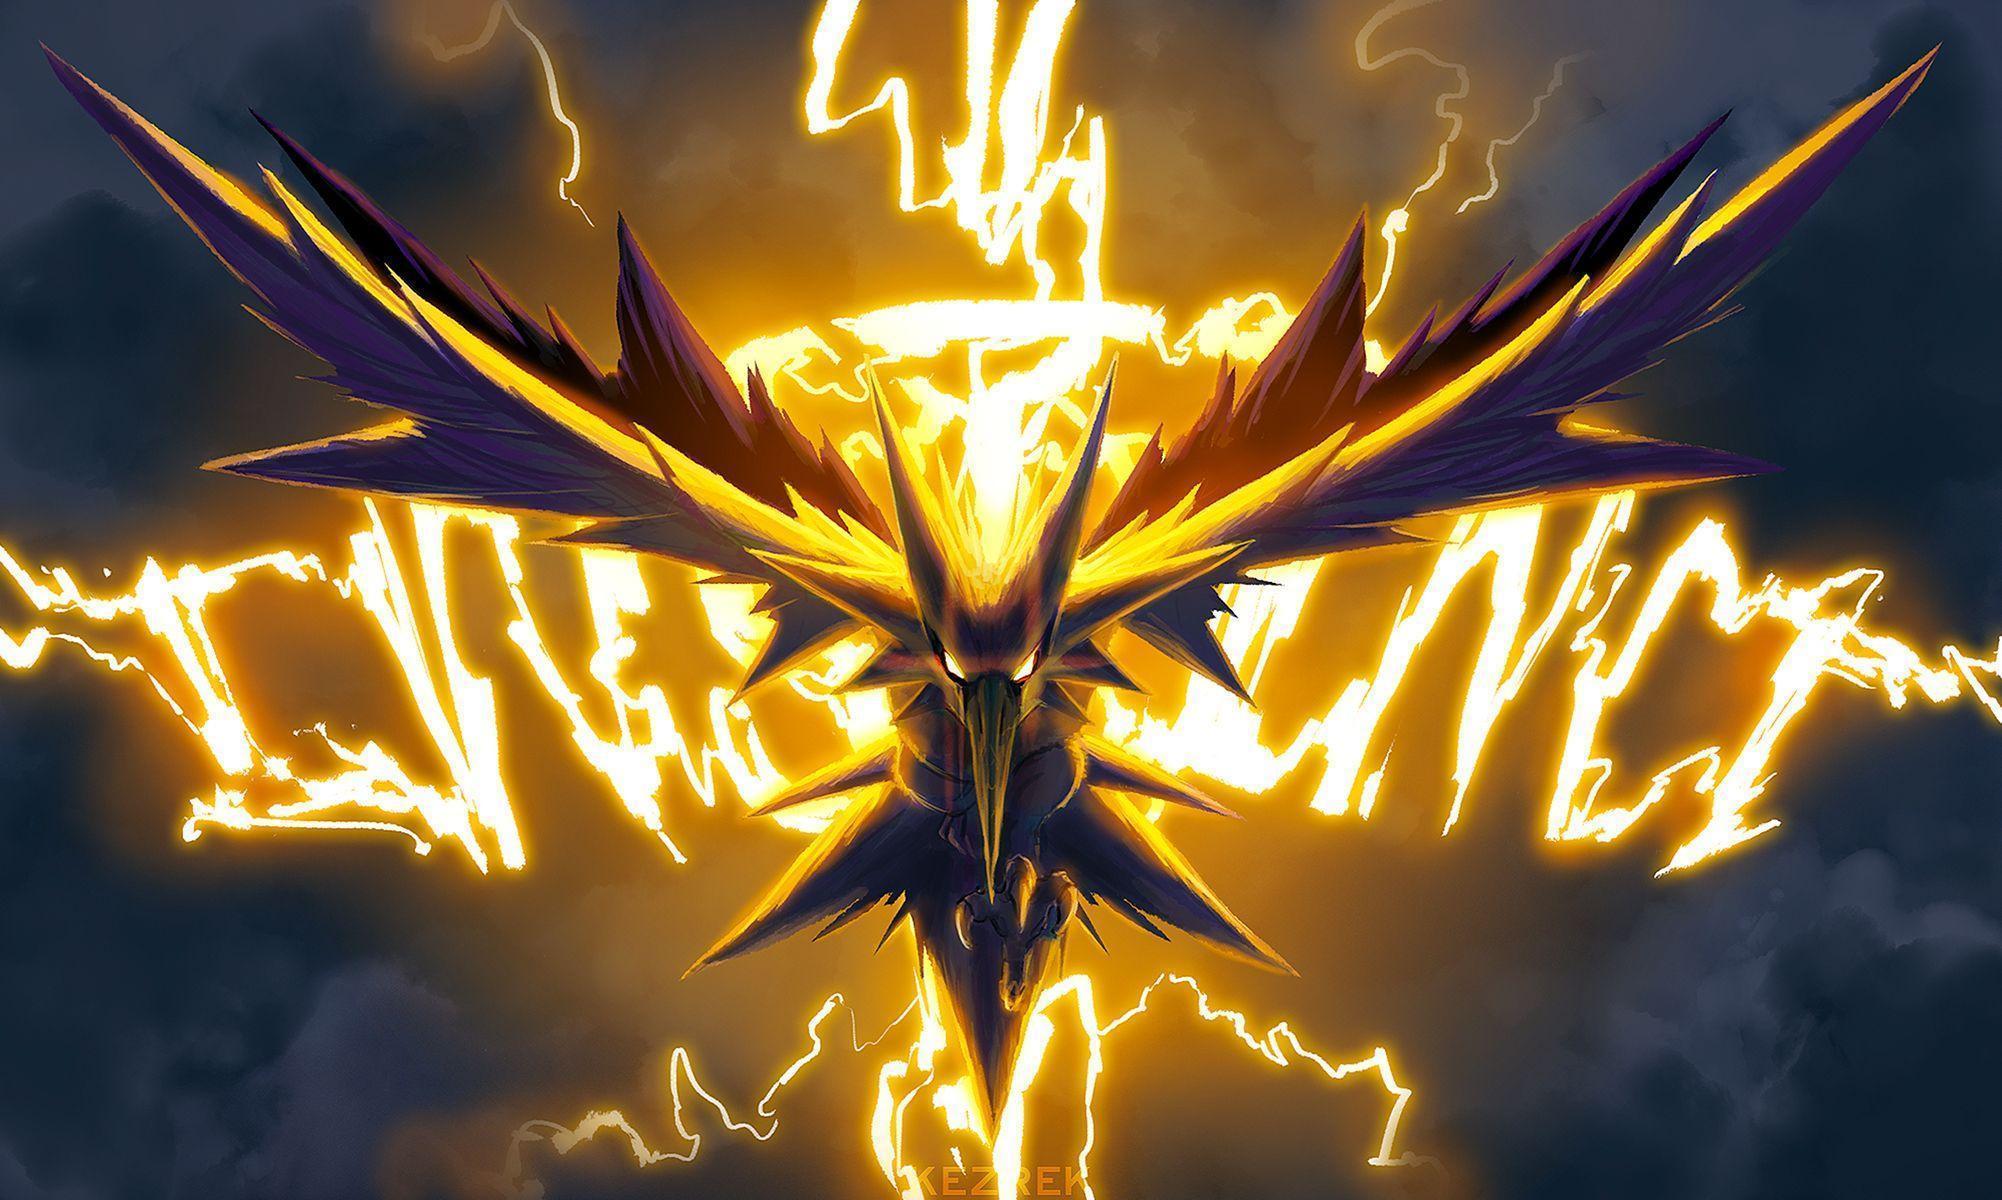 Zapdos (Pokémon) HD Wallpaper and Background Image